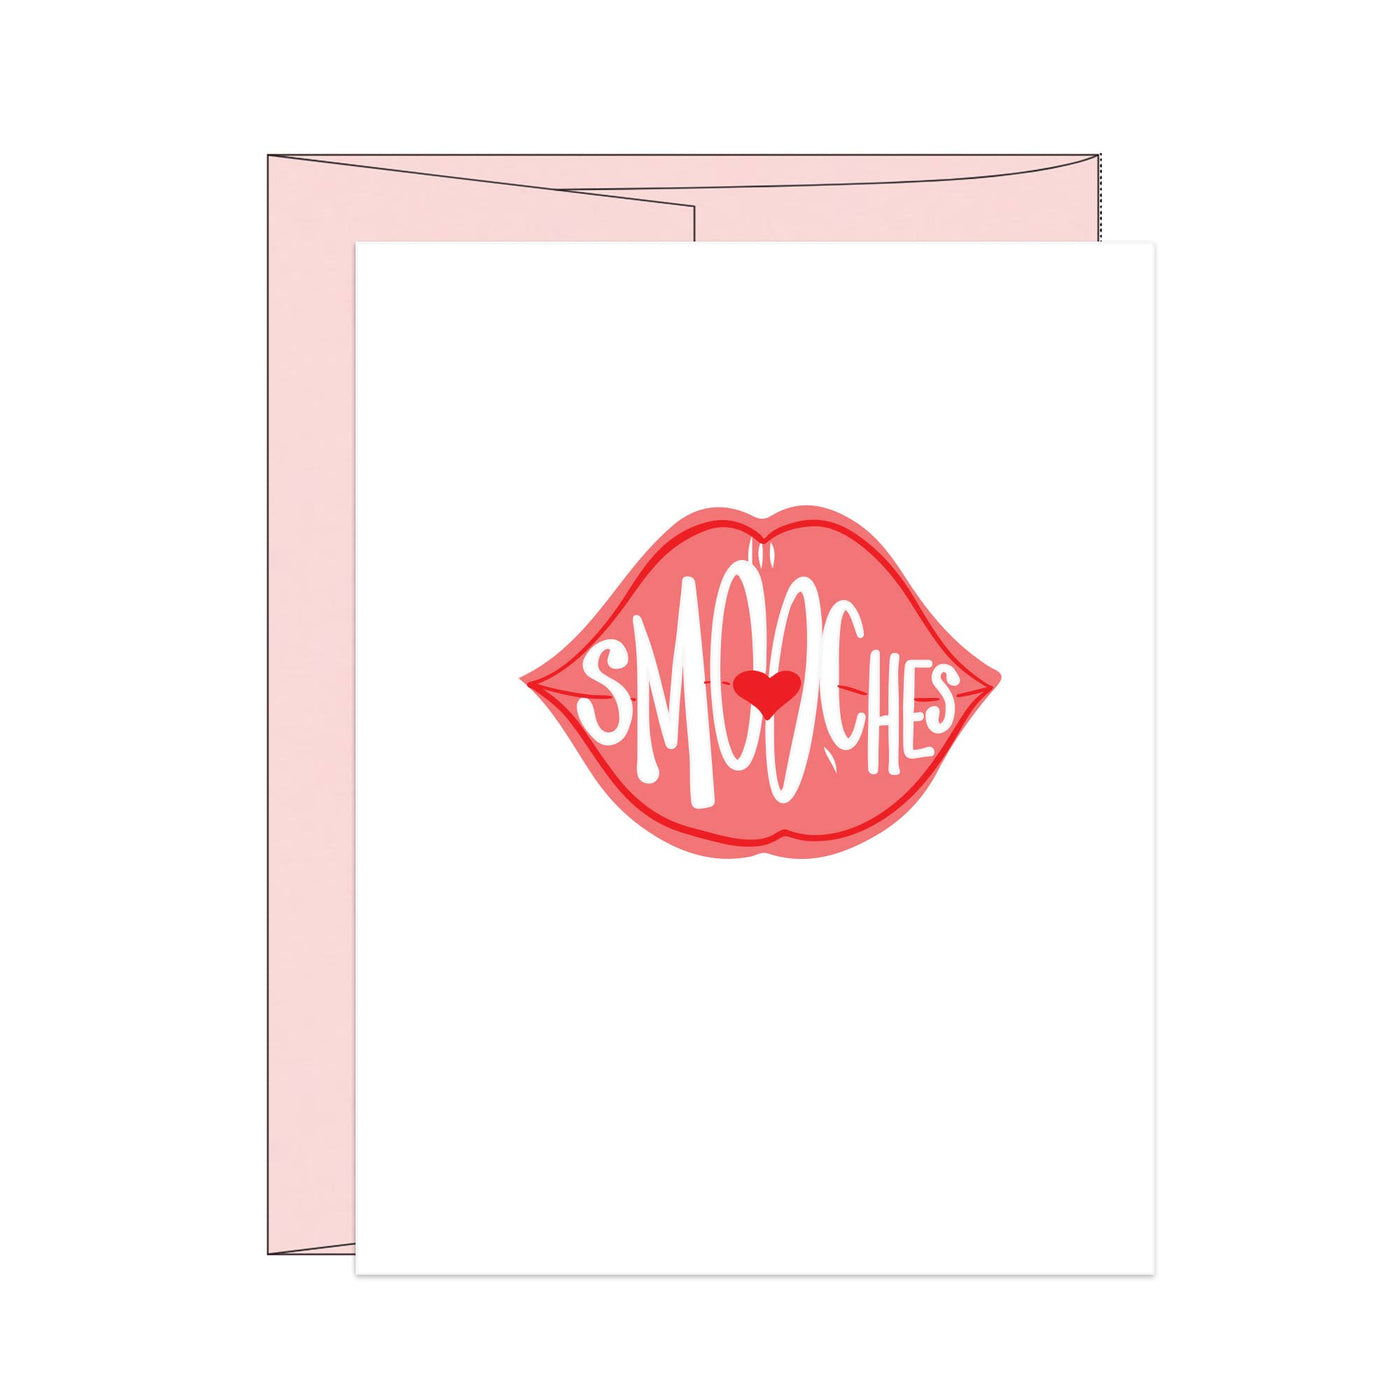 Smooches Letterpress Valentines Day Card